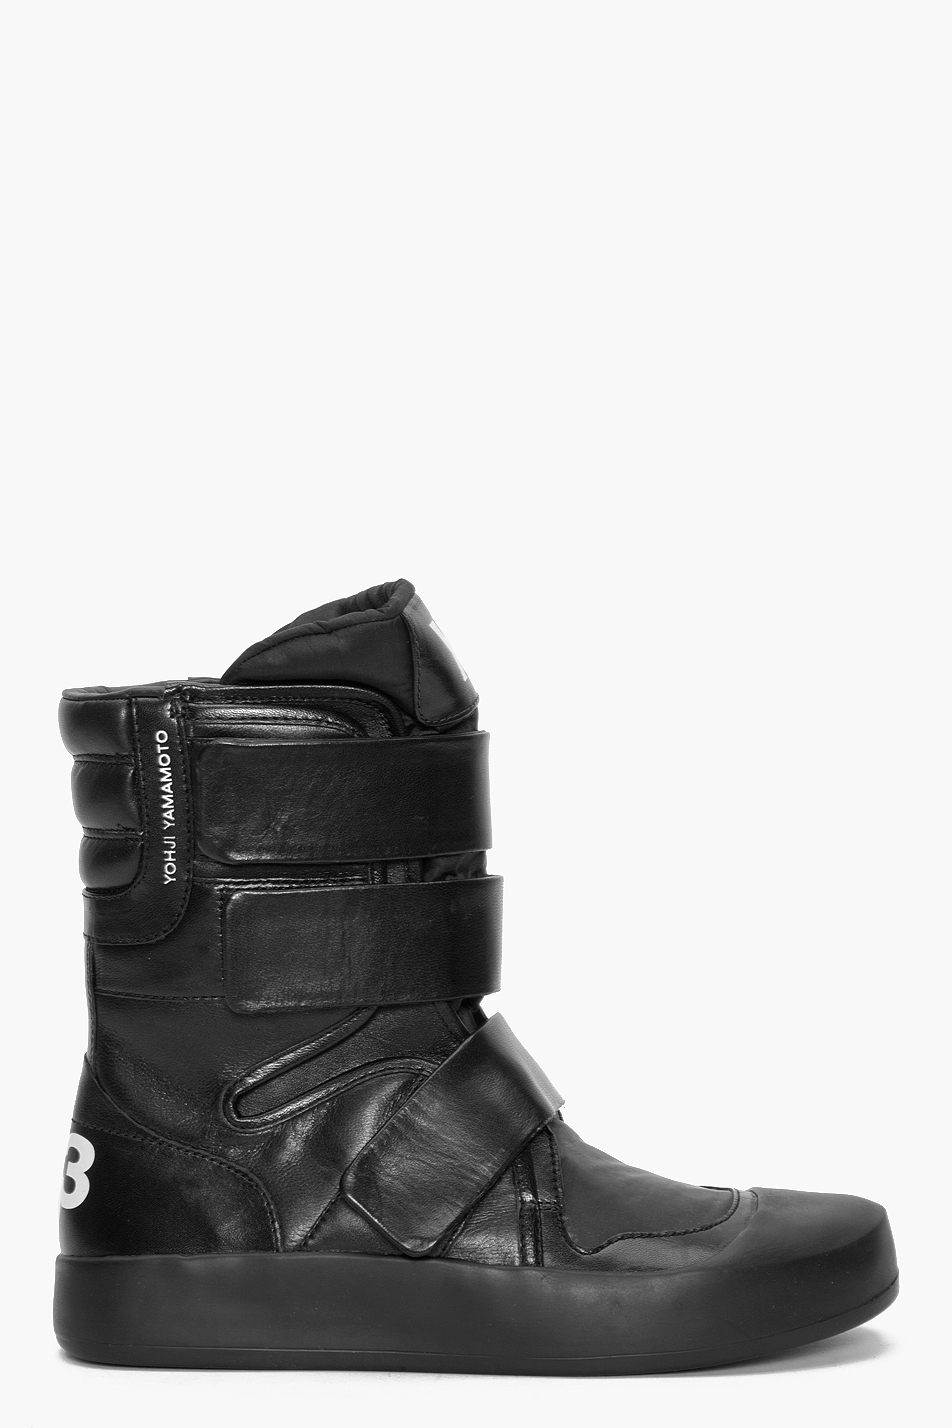 black sneaker boots